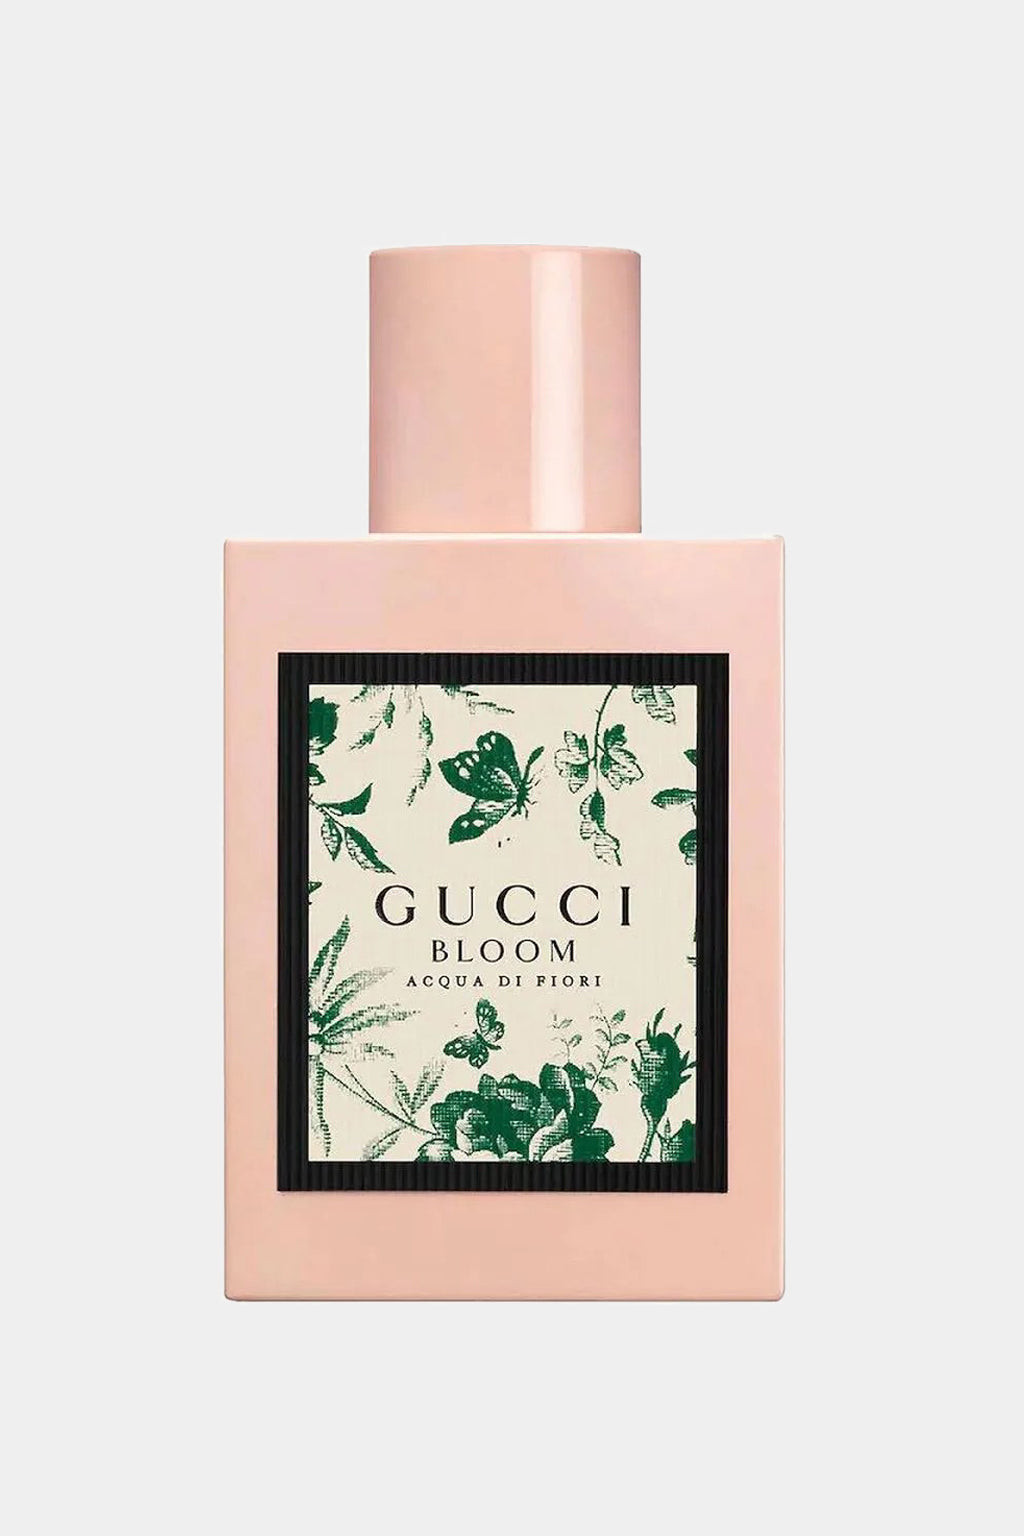 Gucci - Bloom Acqua Di Fiori Eau de Toilette